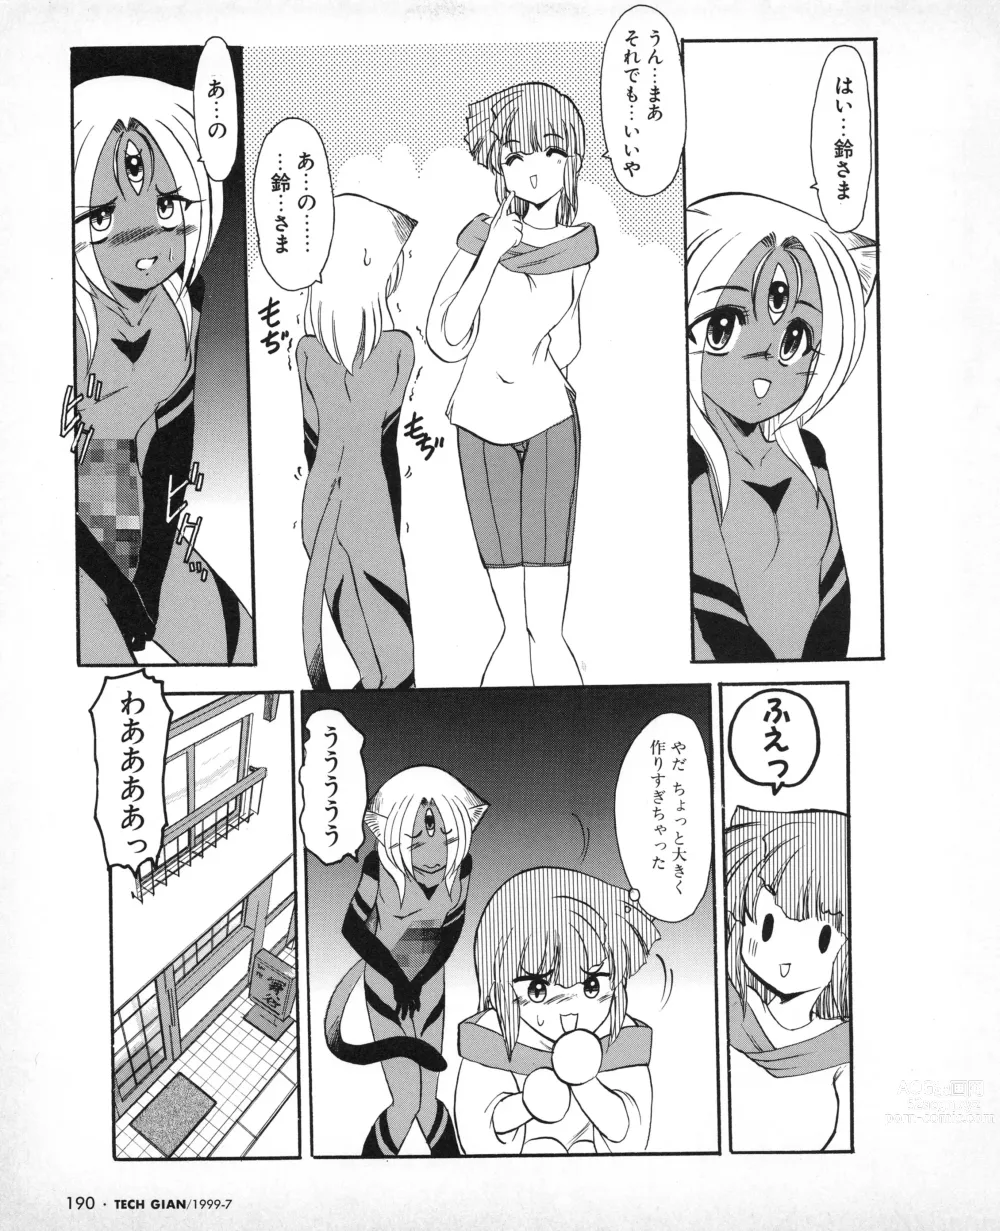 Page 185 of manga Tech Gian 033